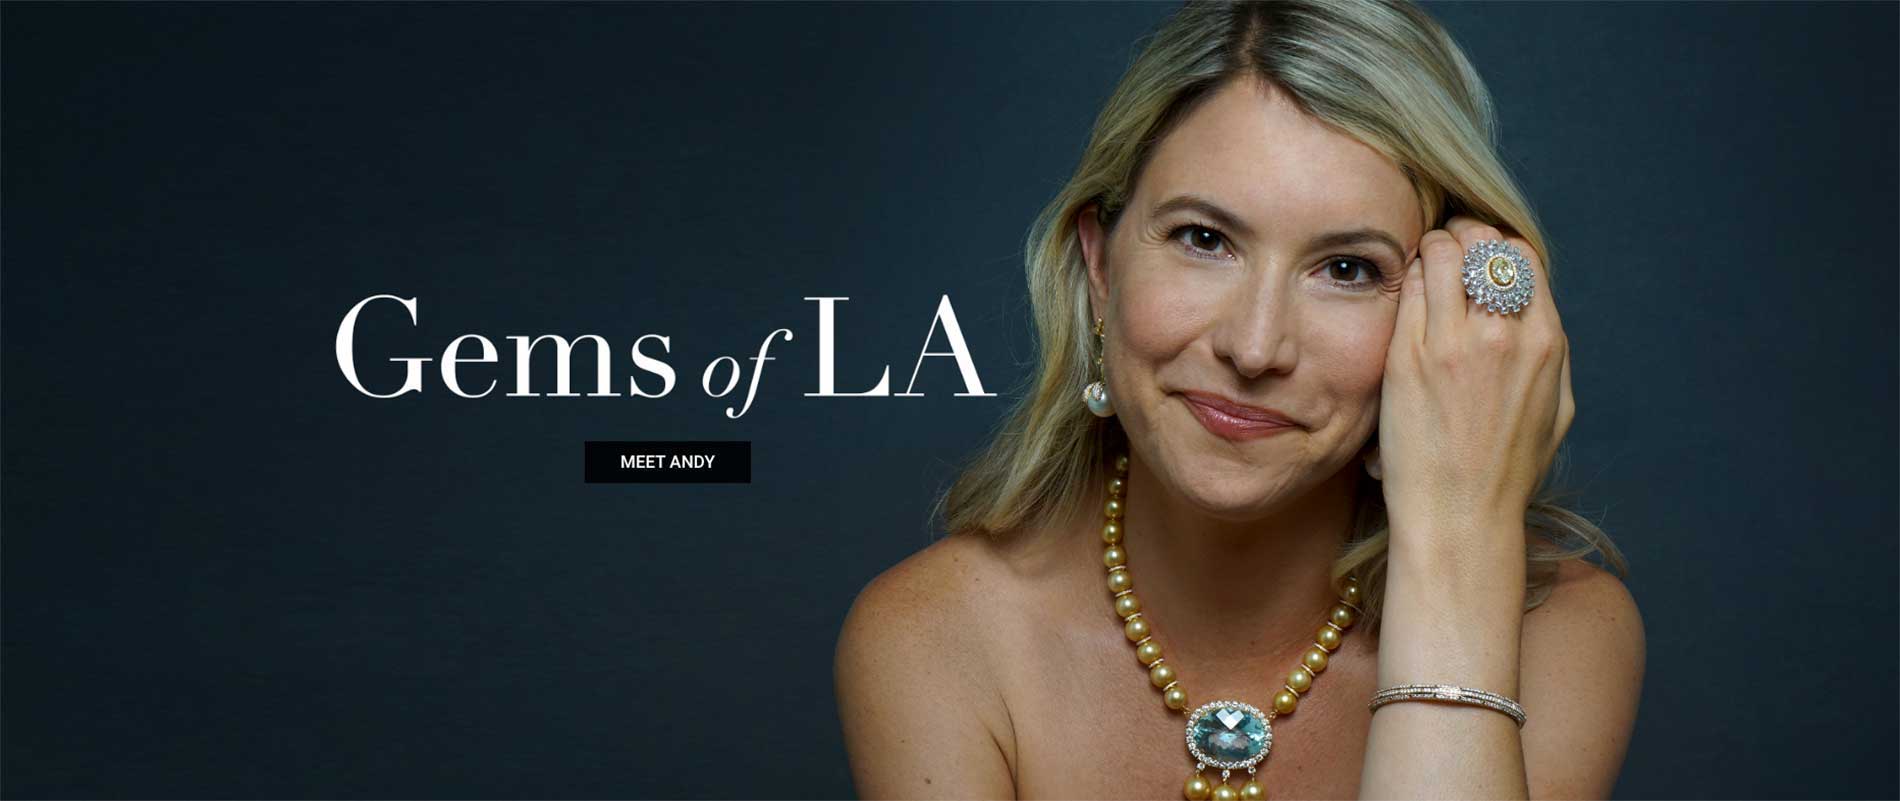 Gems of LA promotion and website image